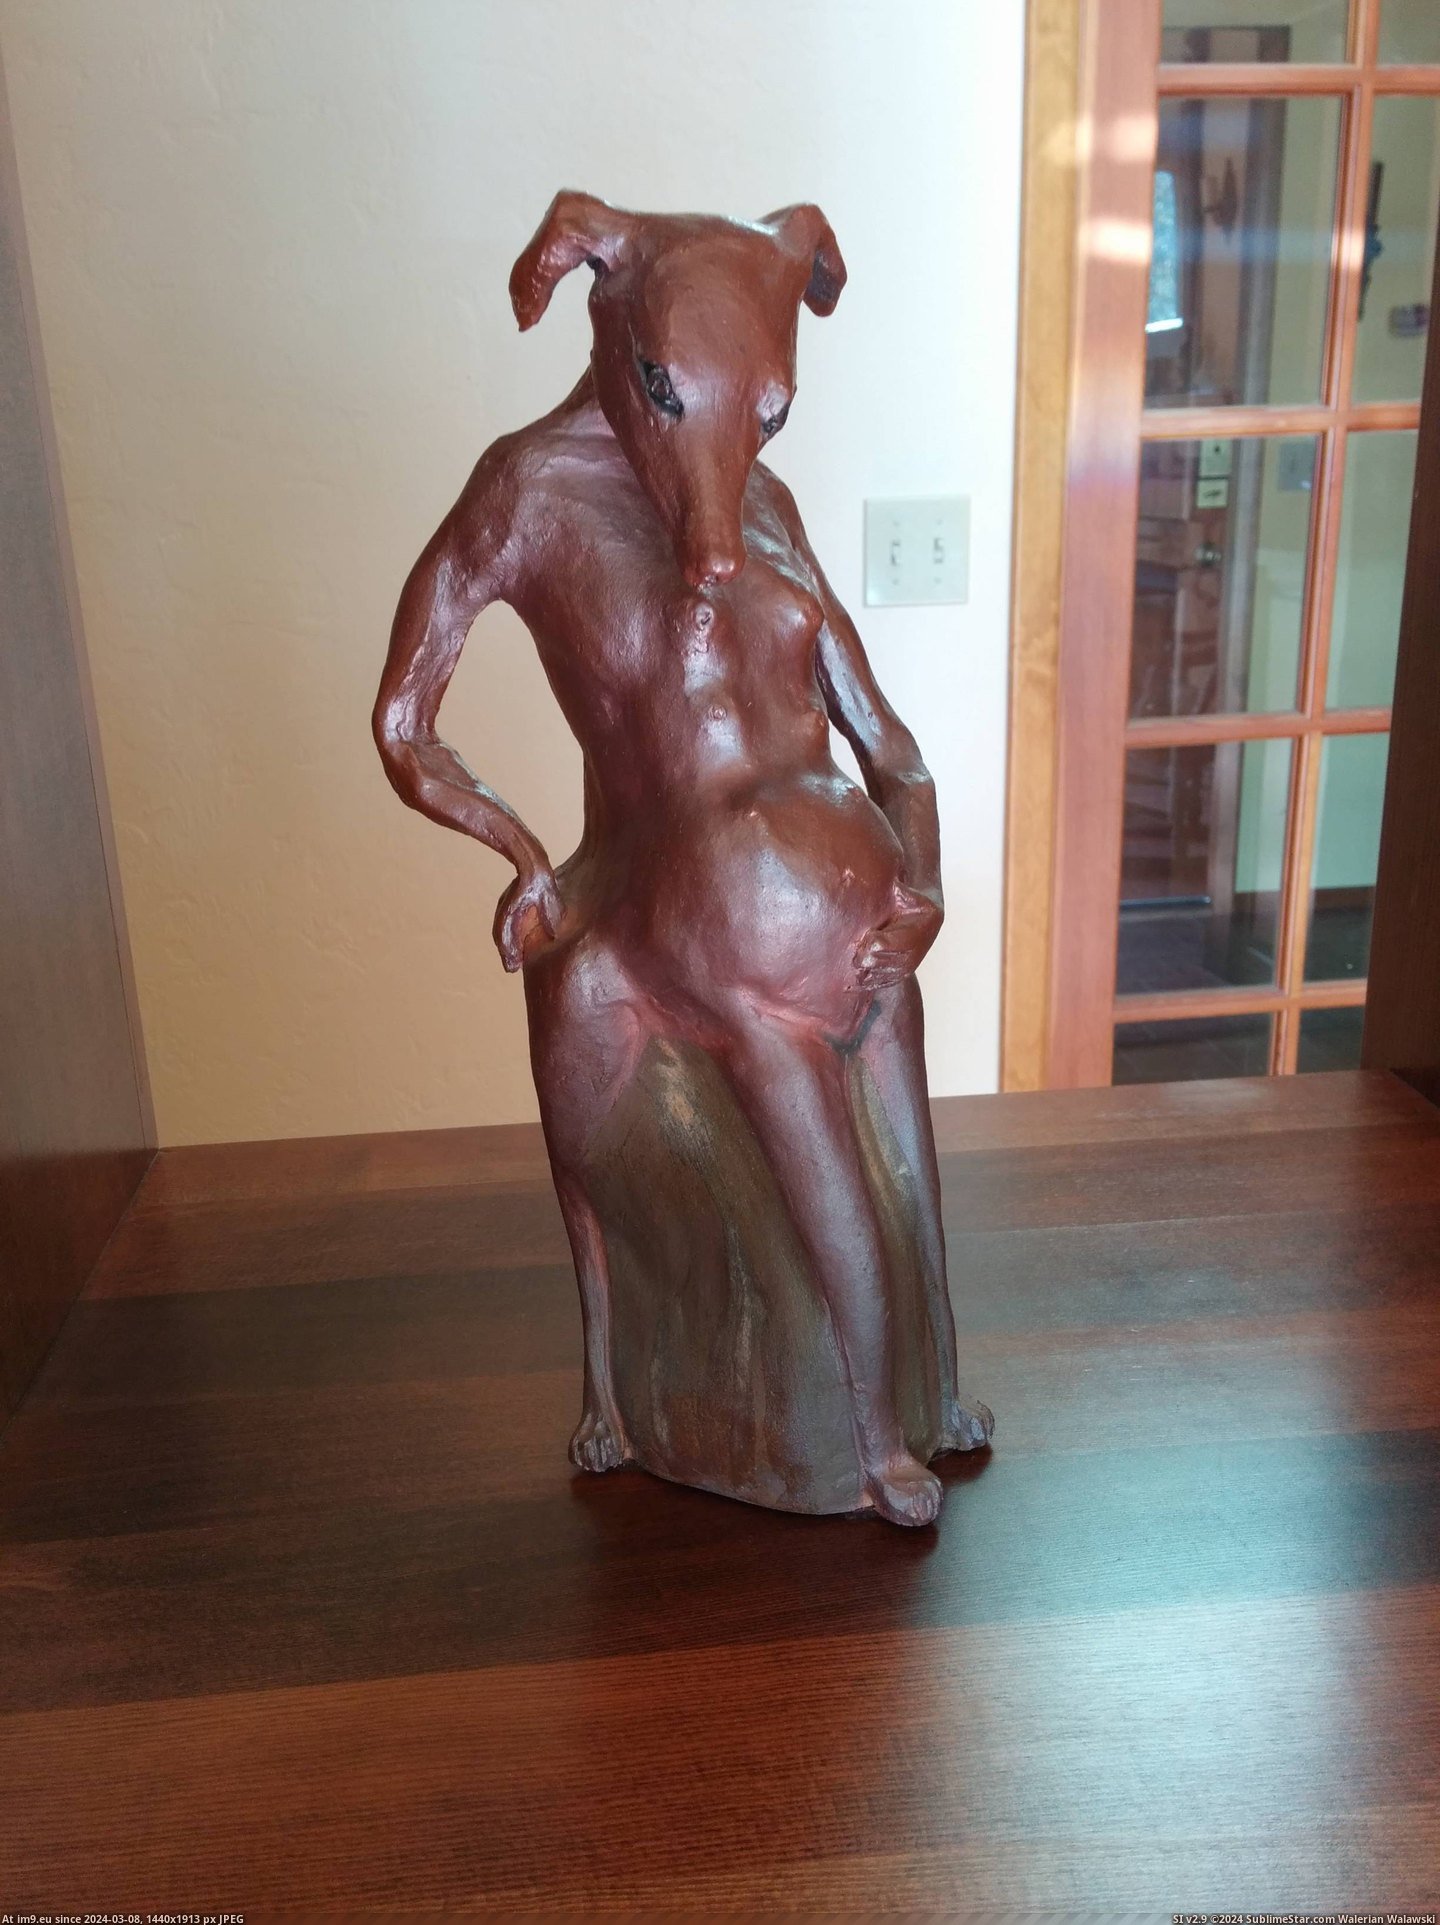 #Wtf #Statue #Creepy [Wtf] Creepy statue Pic. (Изображение из альбом My r/WTF favs))